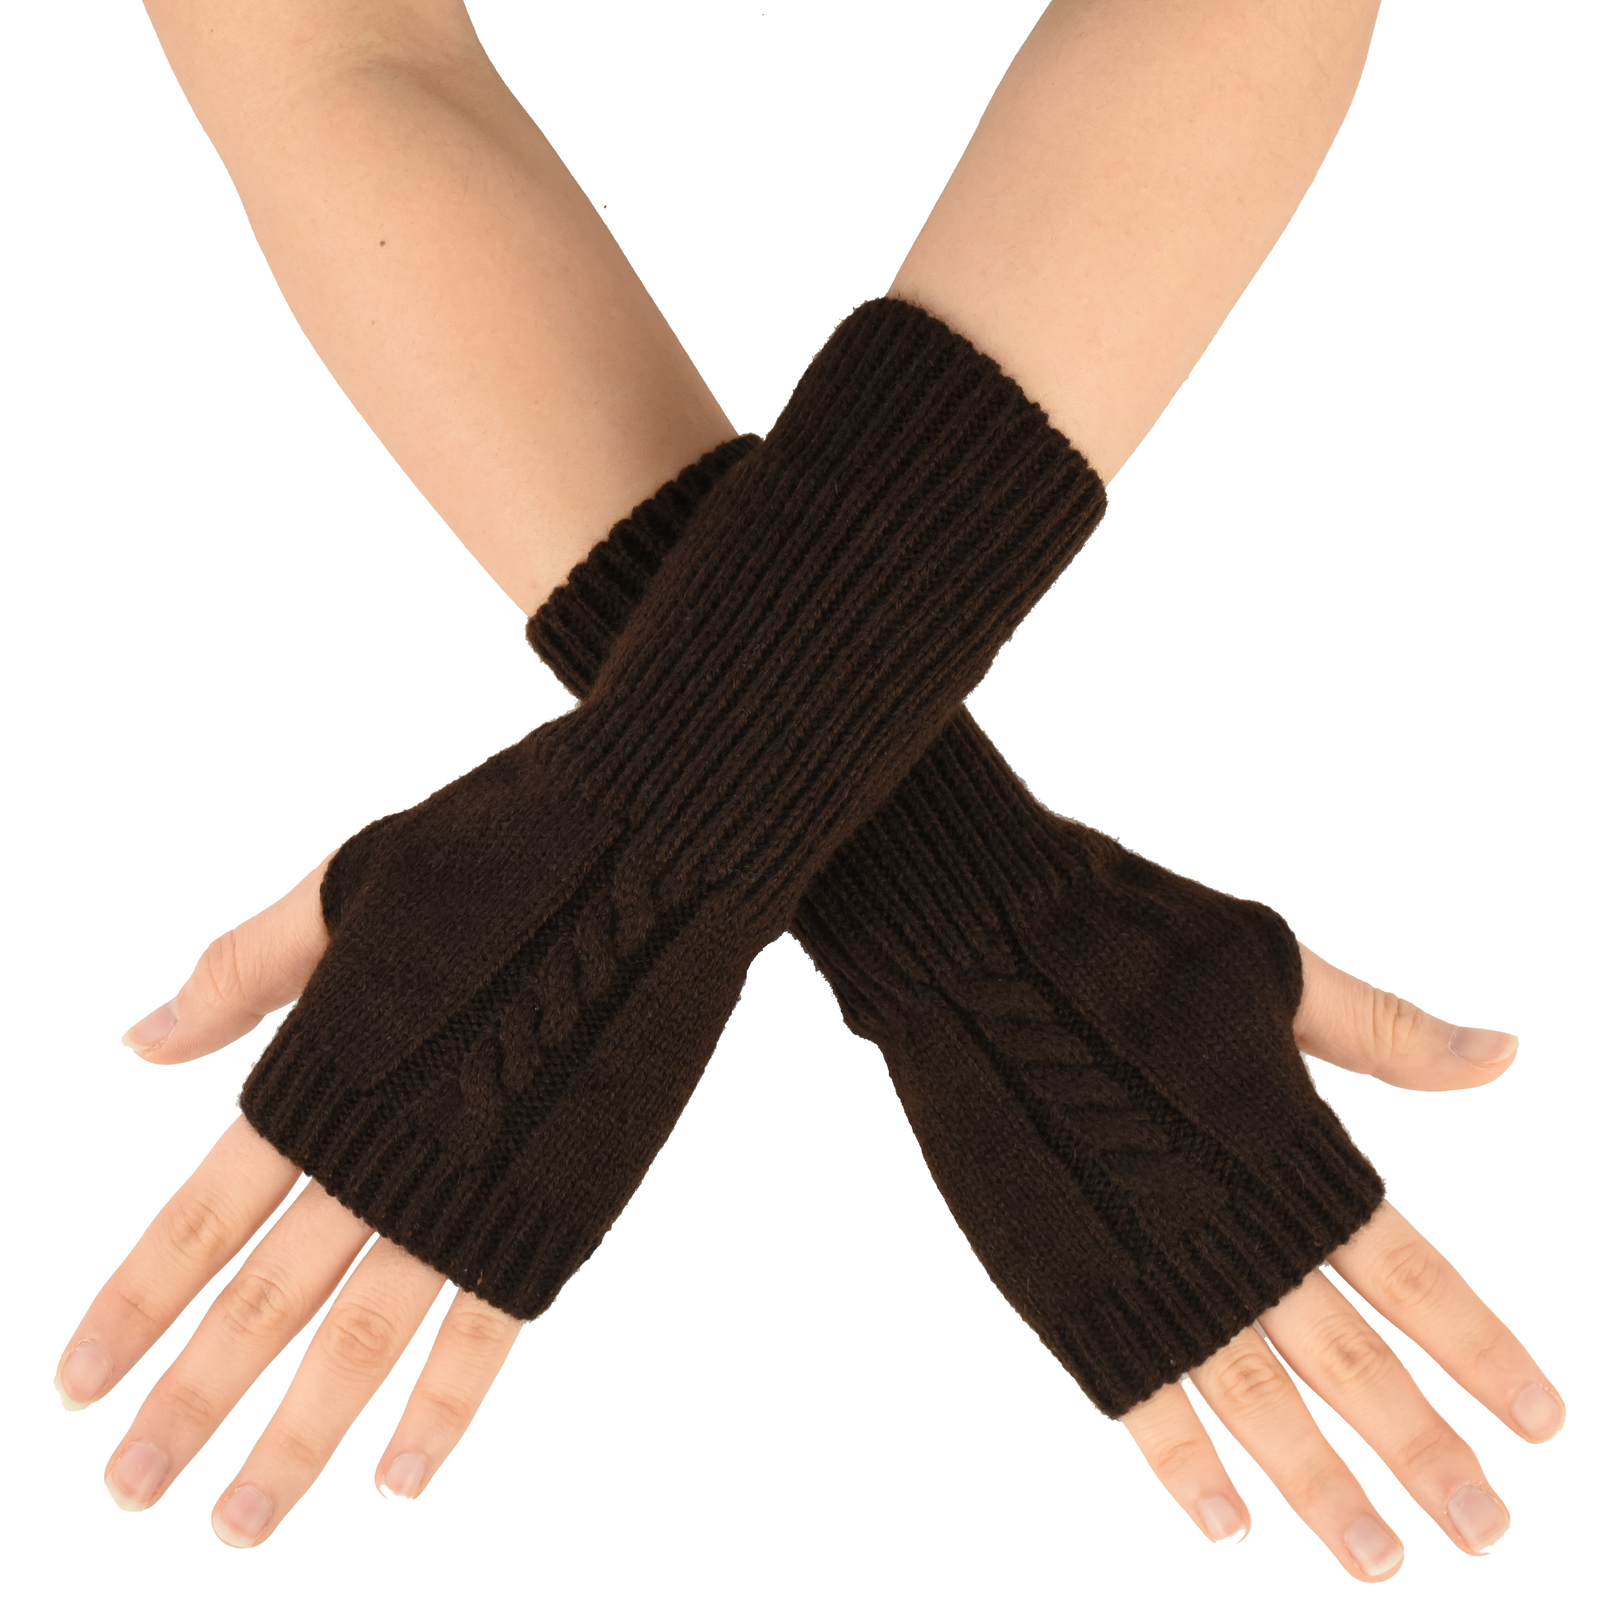 Crochet Knit Wrist Warmers Hand Cuffs Check Twist Wholesale Welcome